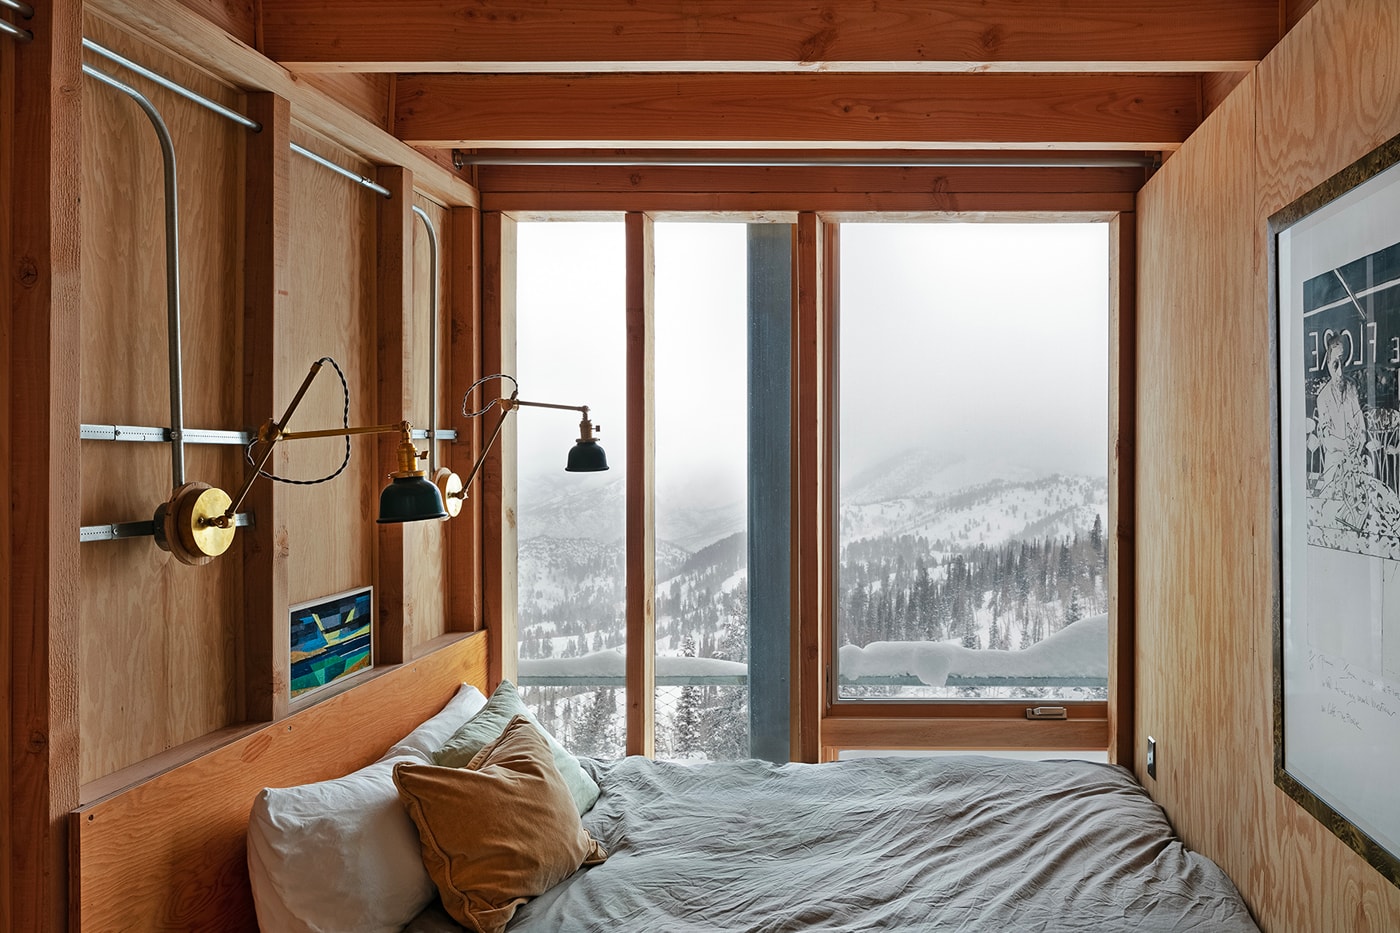 Schemata Architects Jo Nagasaka Chalet on Powder Mountain info Powder Mountain Utah skiing national parks architecture homes 